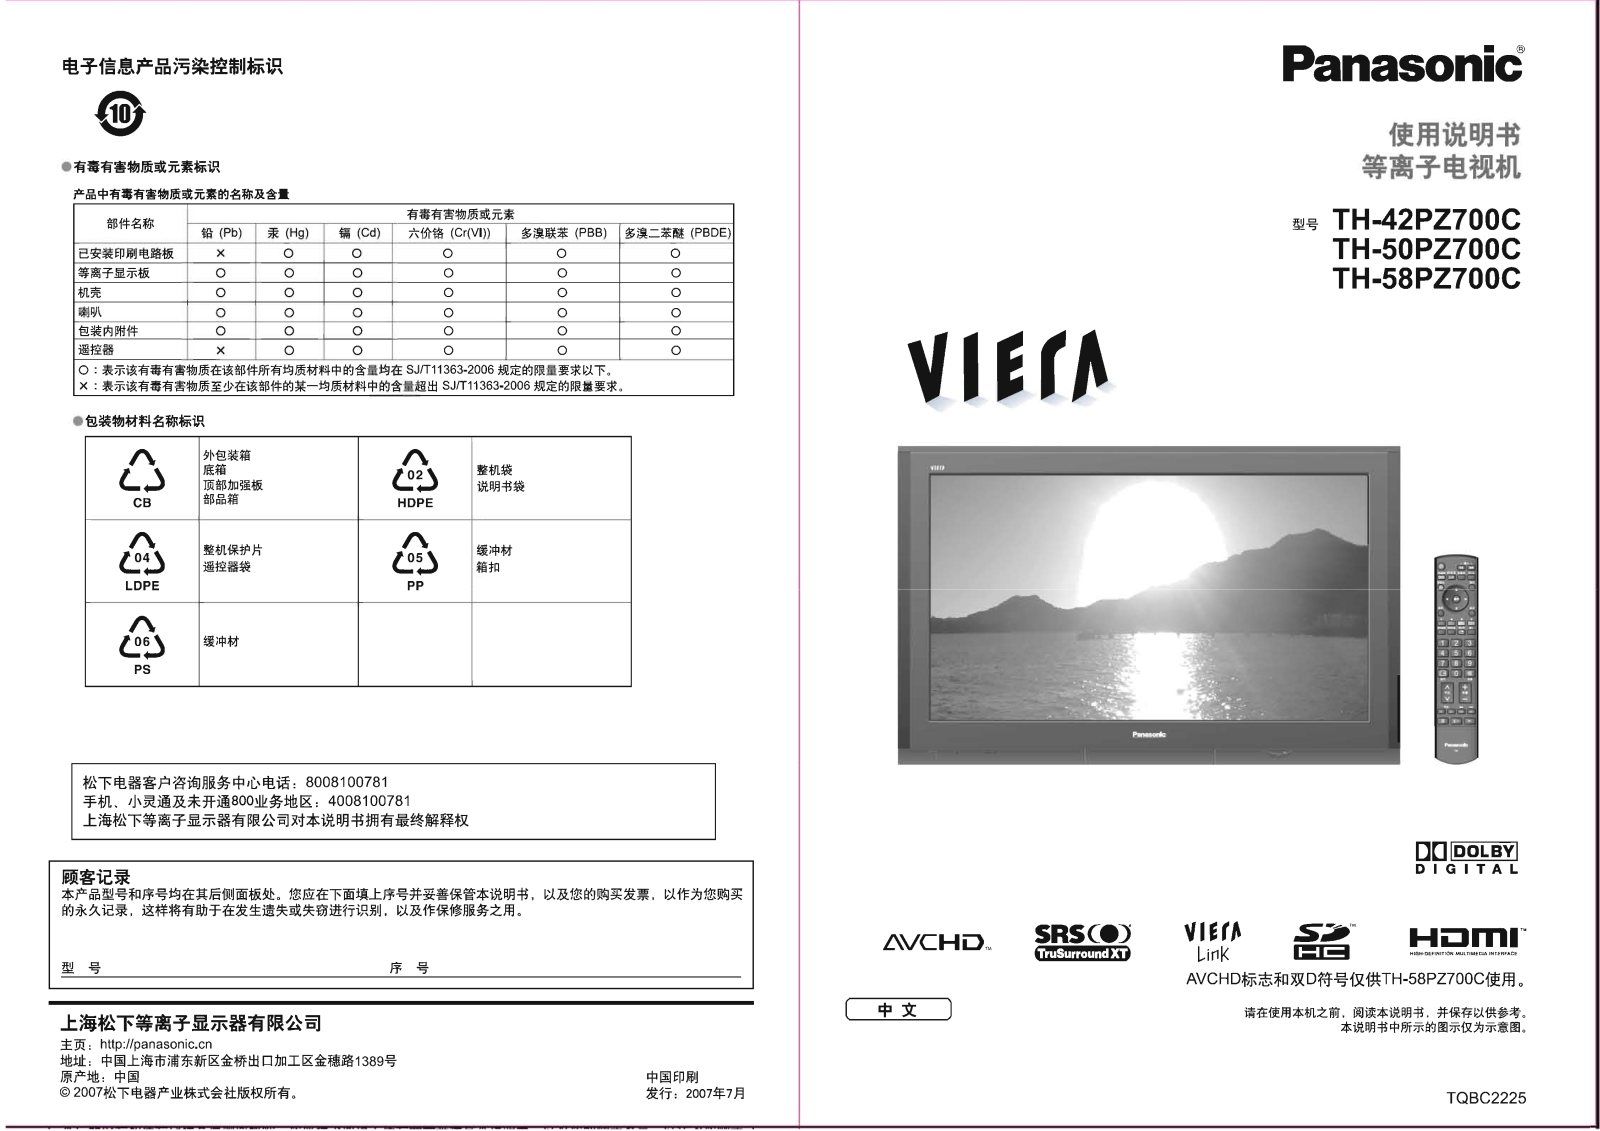 Panasonic TH-42PZ700C, TH-50PZ700C, TH-58PZ700C User Manual